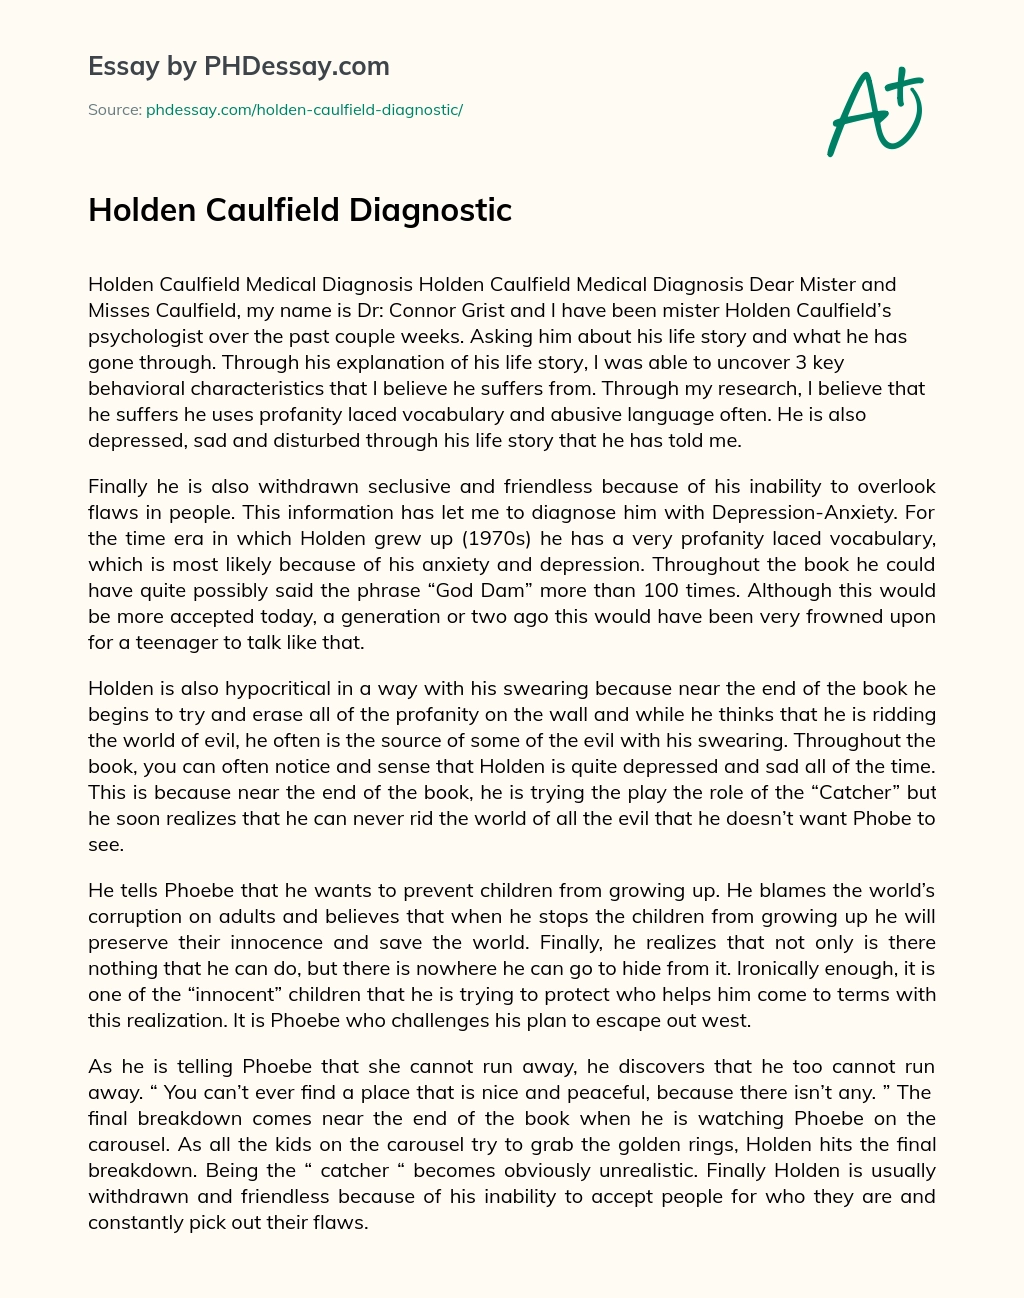 Holden Caulfield Diagnostic essay